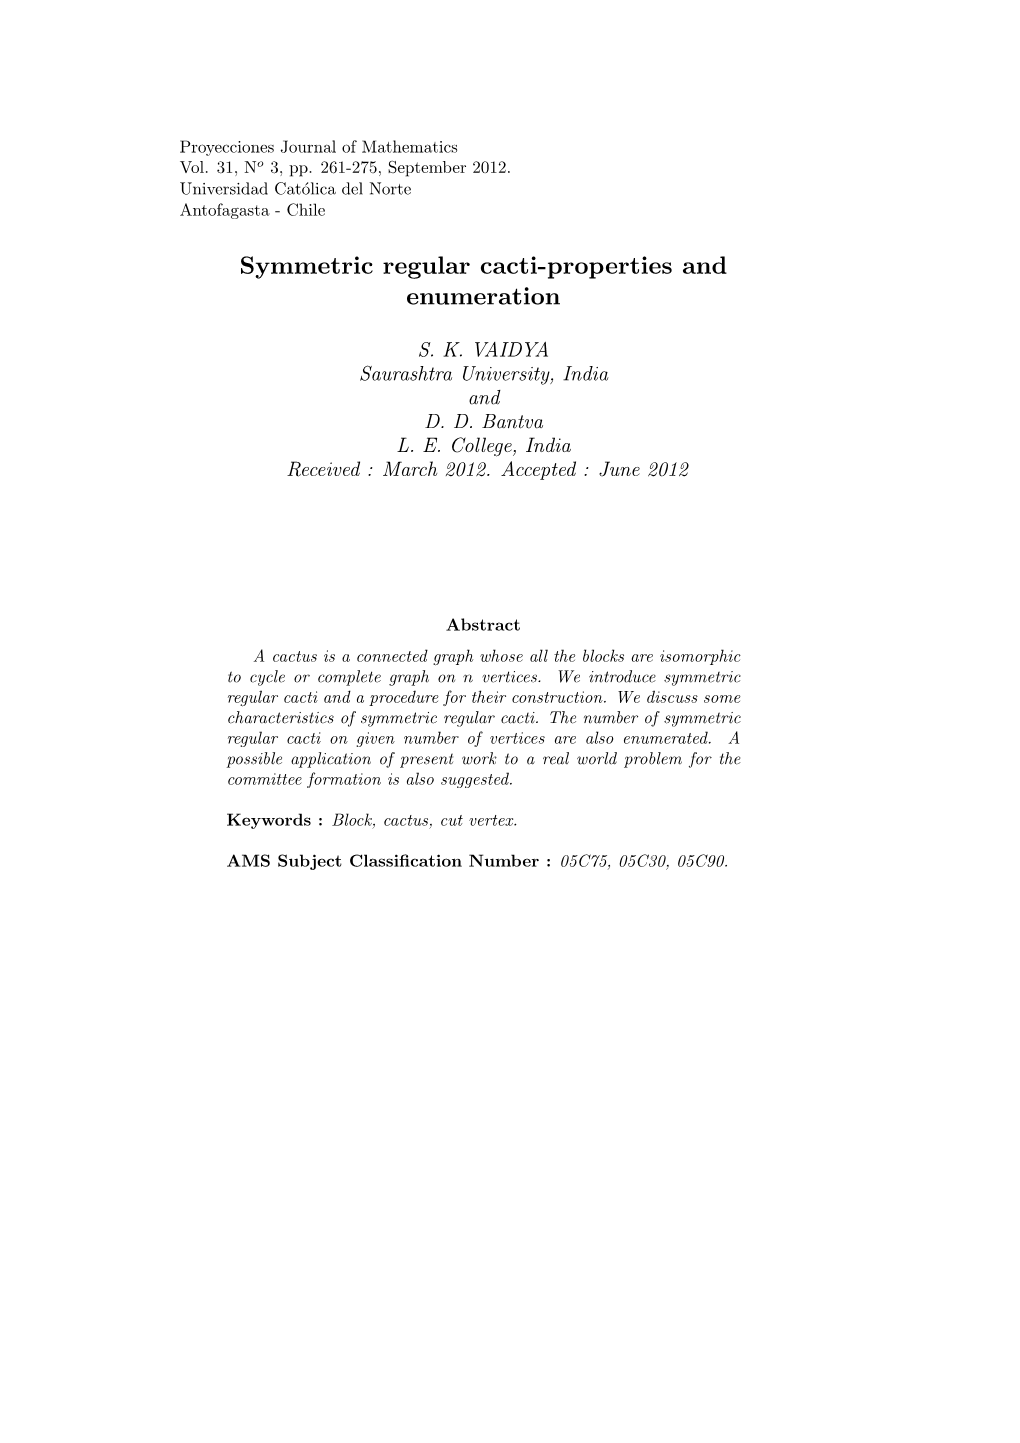 Symmetric Regular Cacti-Properties and Enumeration